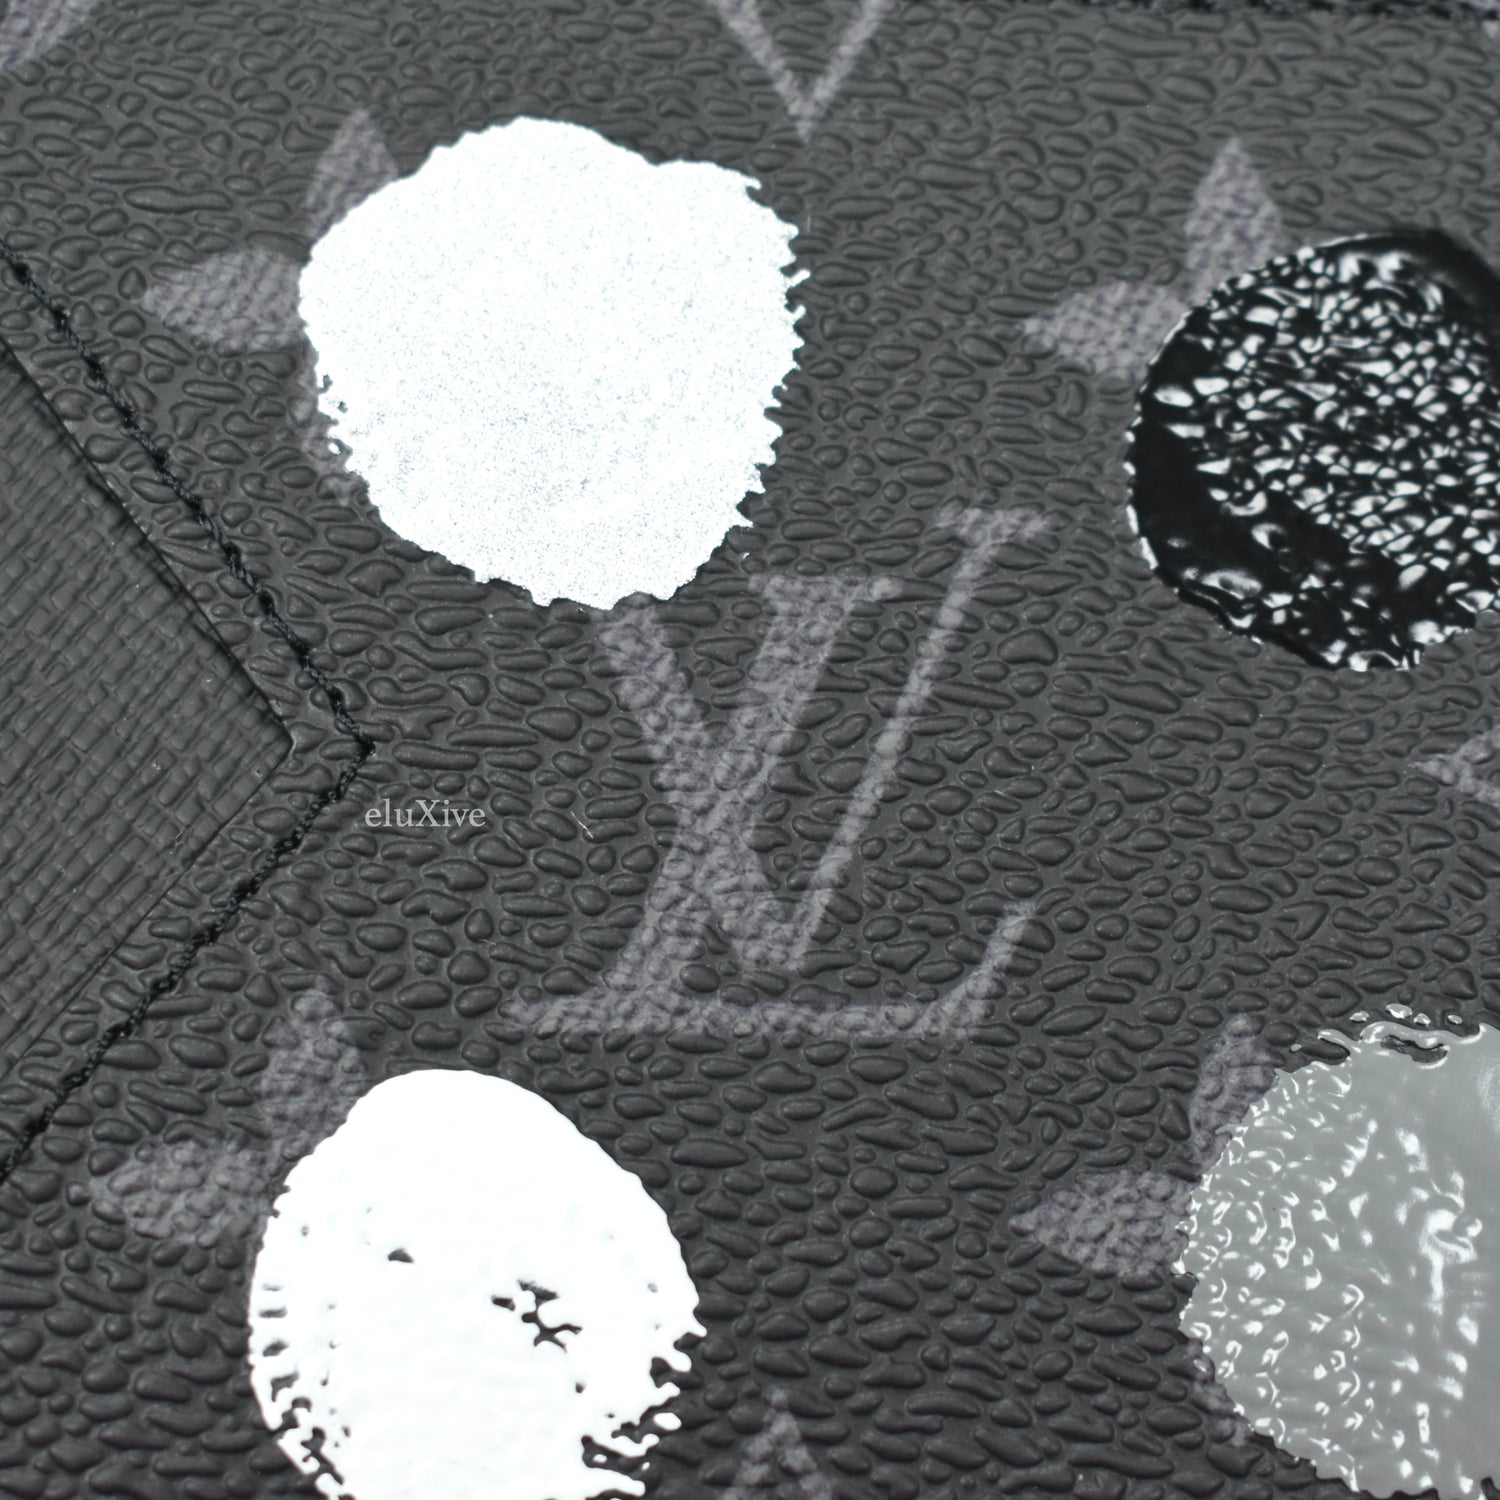 Louis Vuitton Yayoi Kusama Monogram Eclipse Coin Card Holder Zip 4LK0201